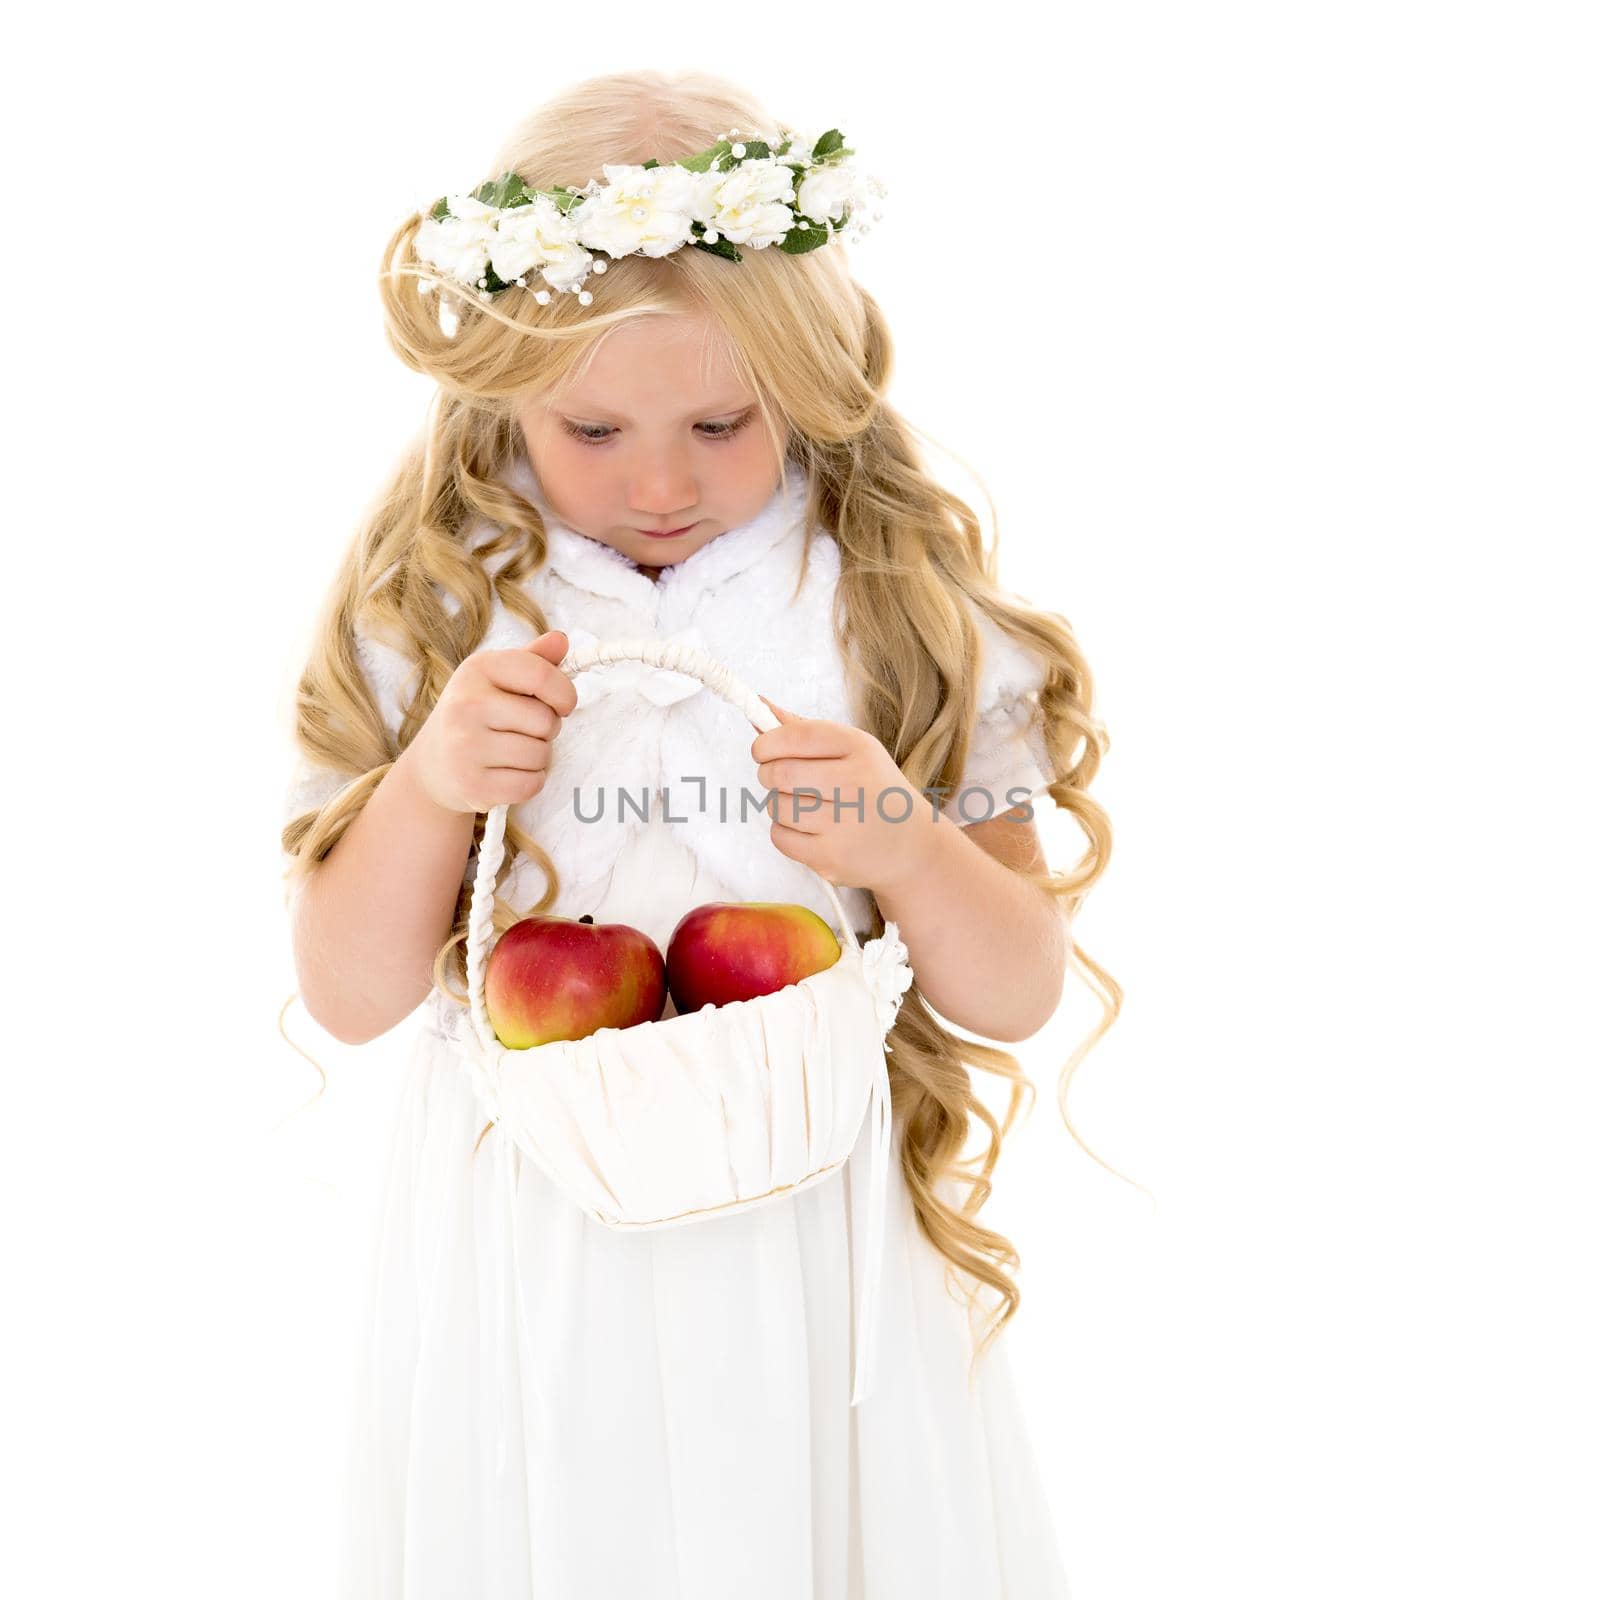 Little girl with a basket of apples. by kolesnikov_studio